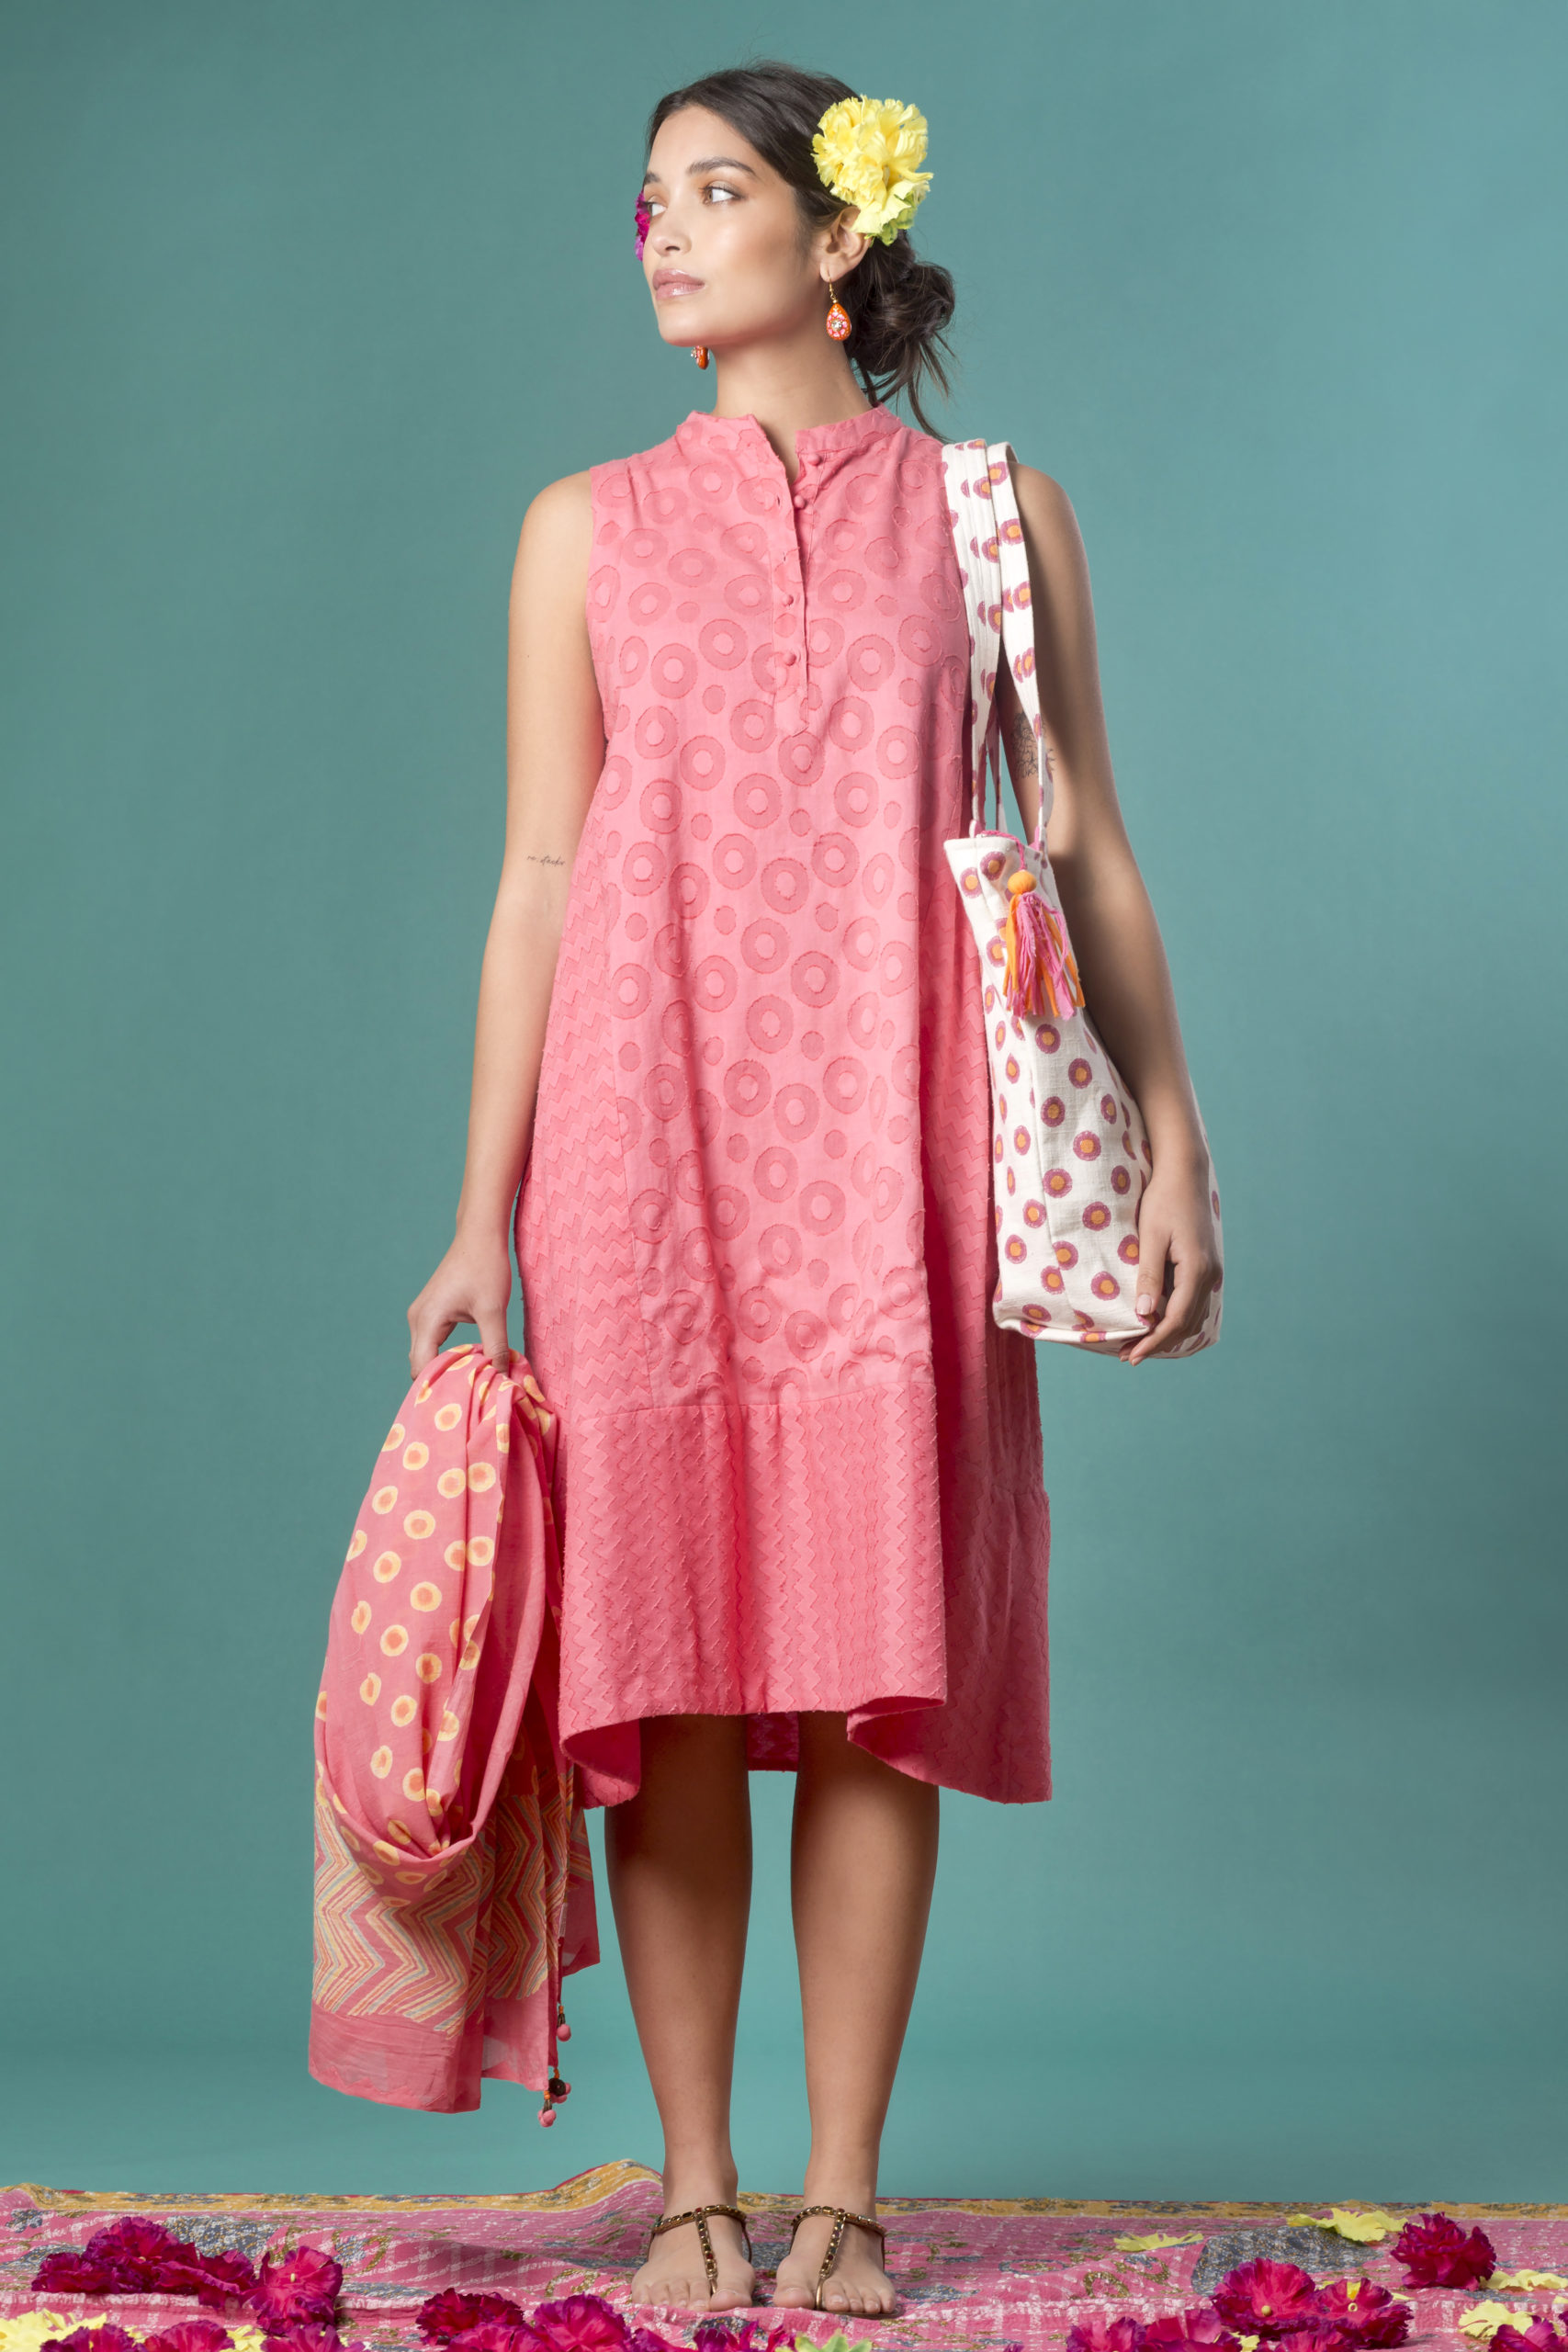 Sleeveless jaquard cotton dress / block print shopping bag and sarong